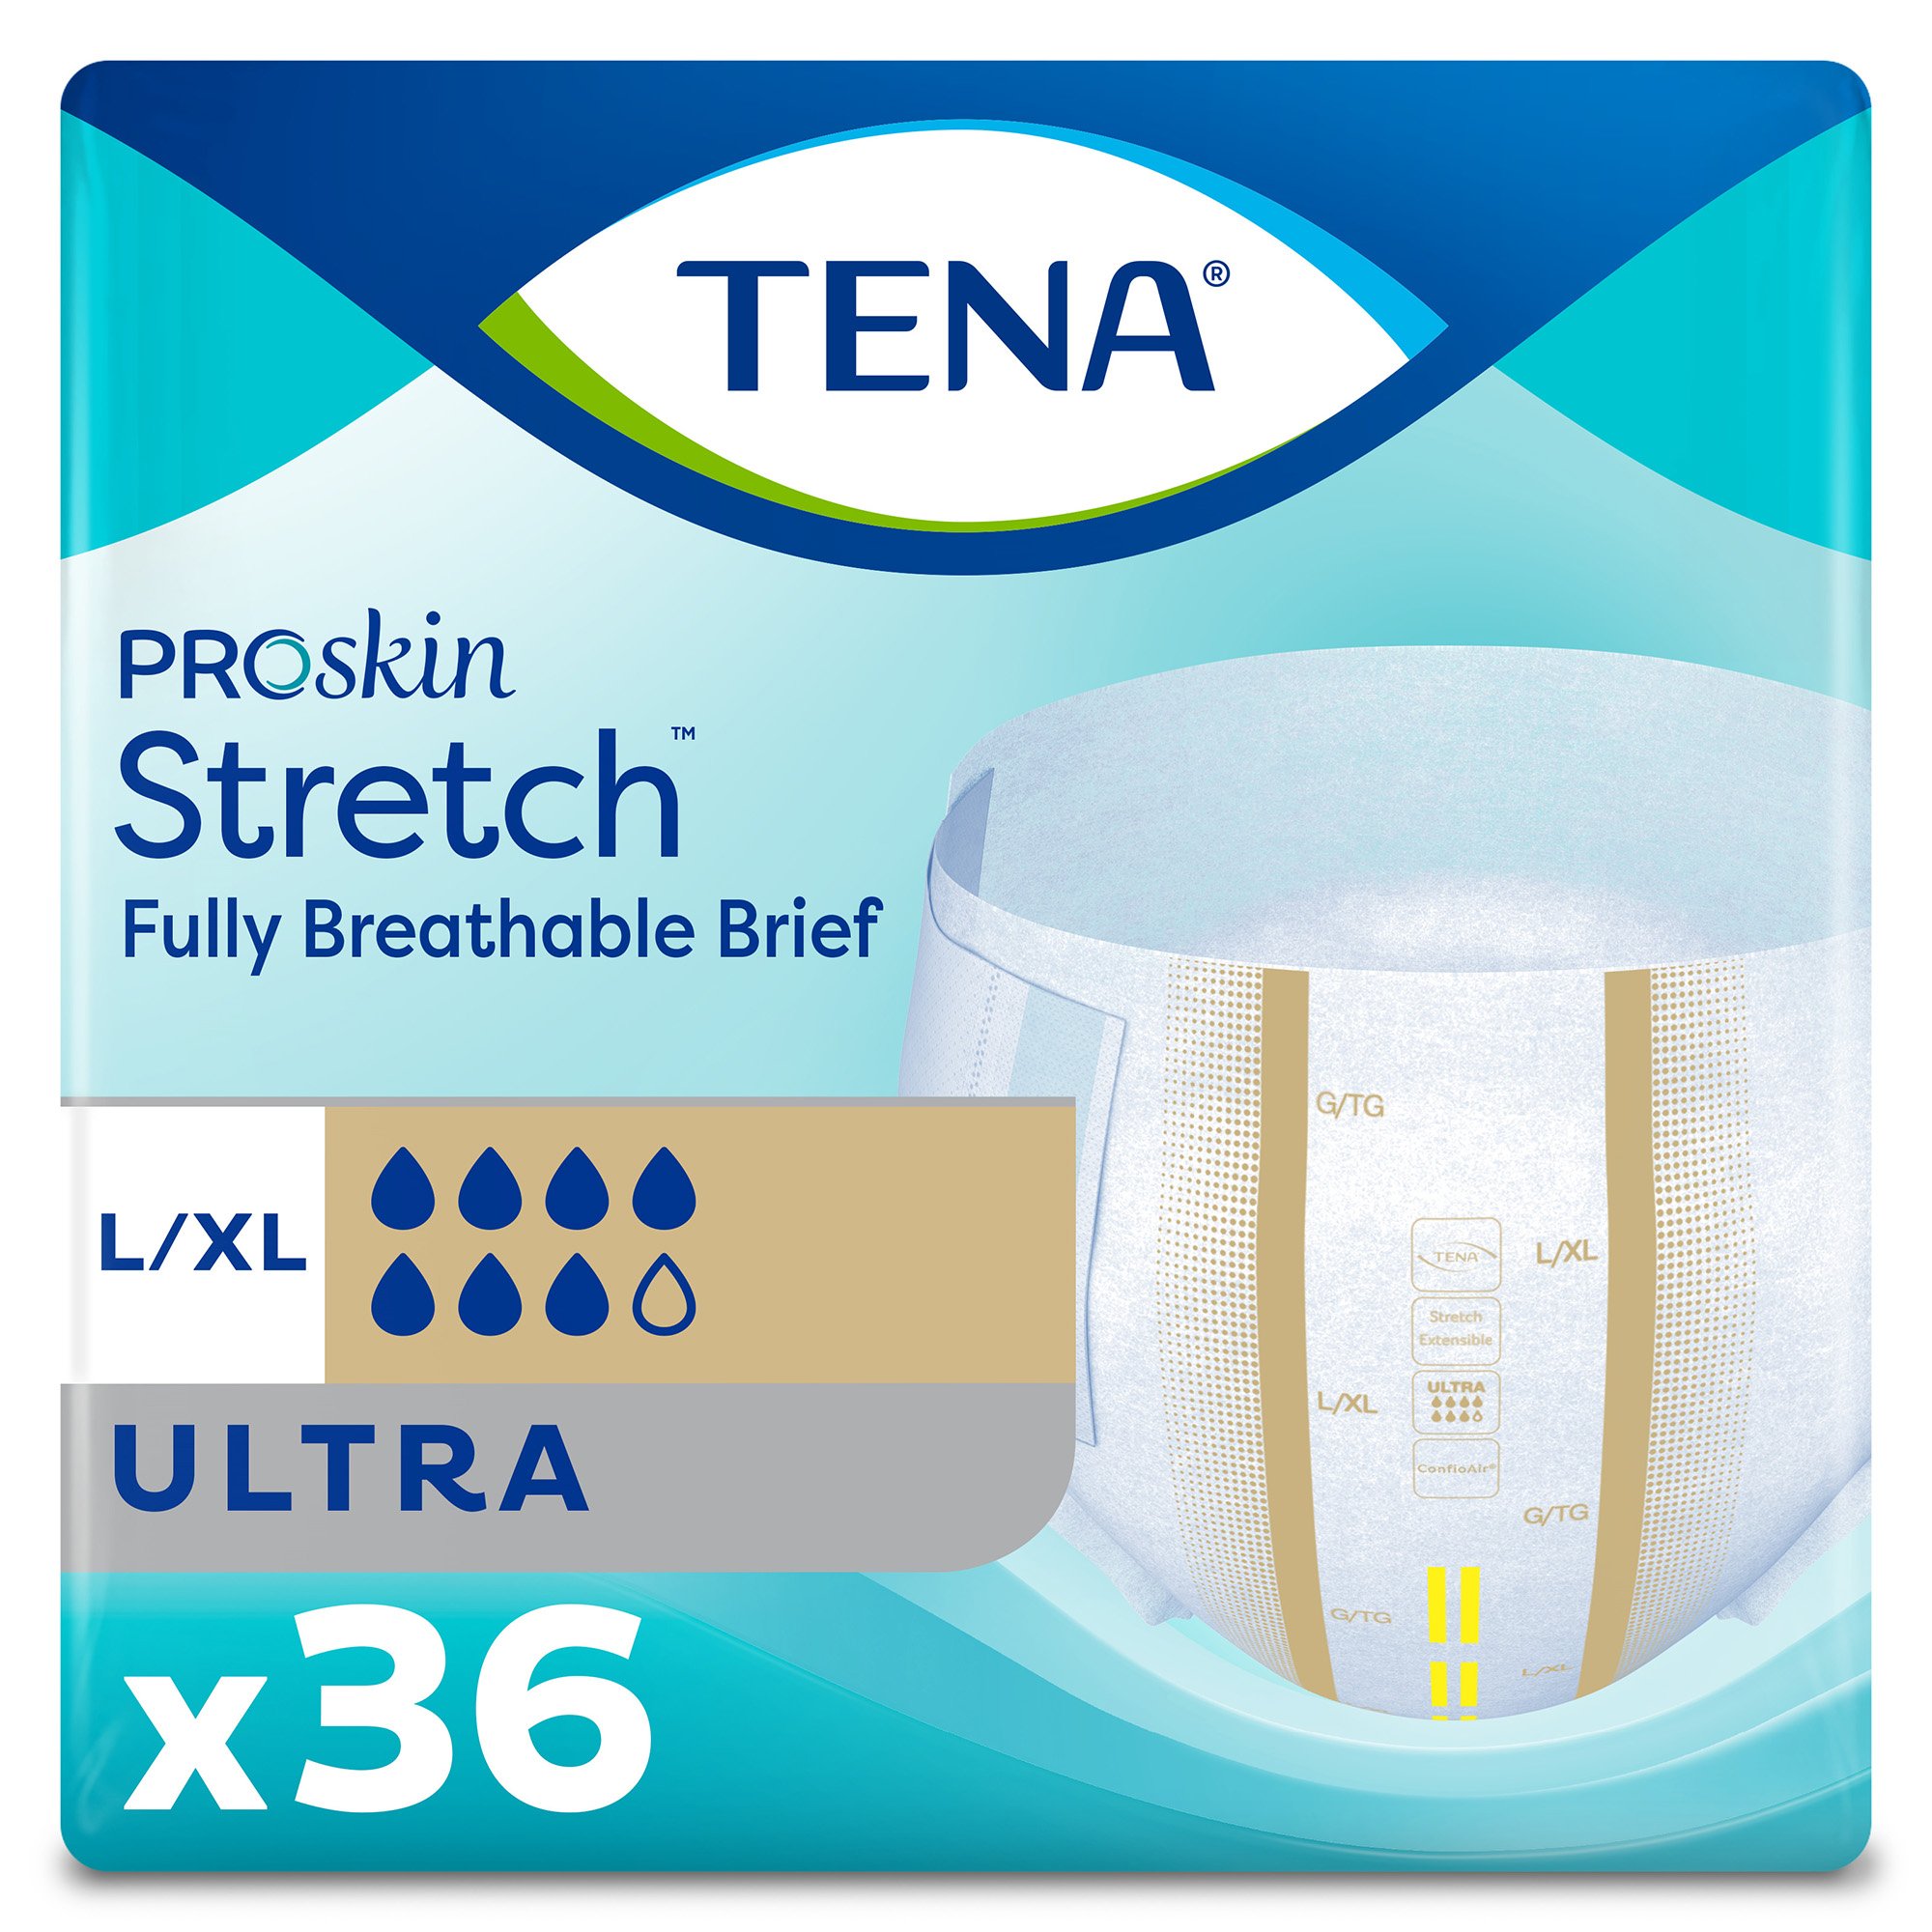 TENA PROskin Night Secure Adult Diaper M (9s) / L (8s) M (9s)